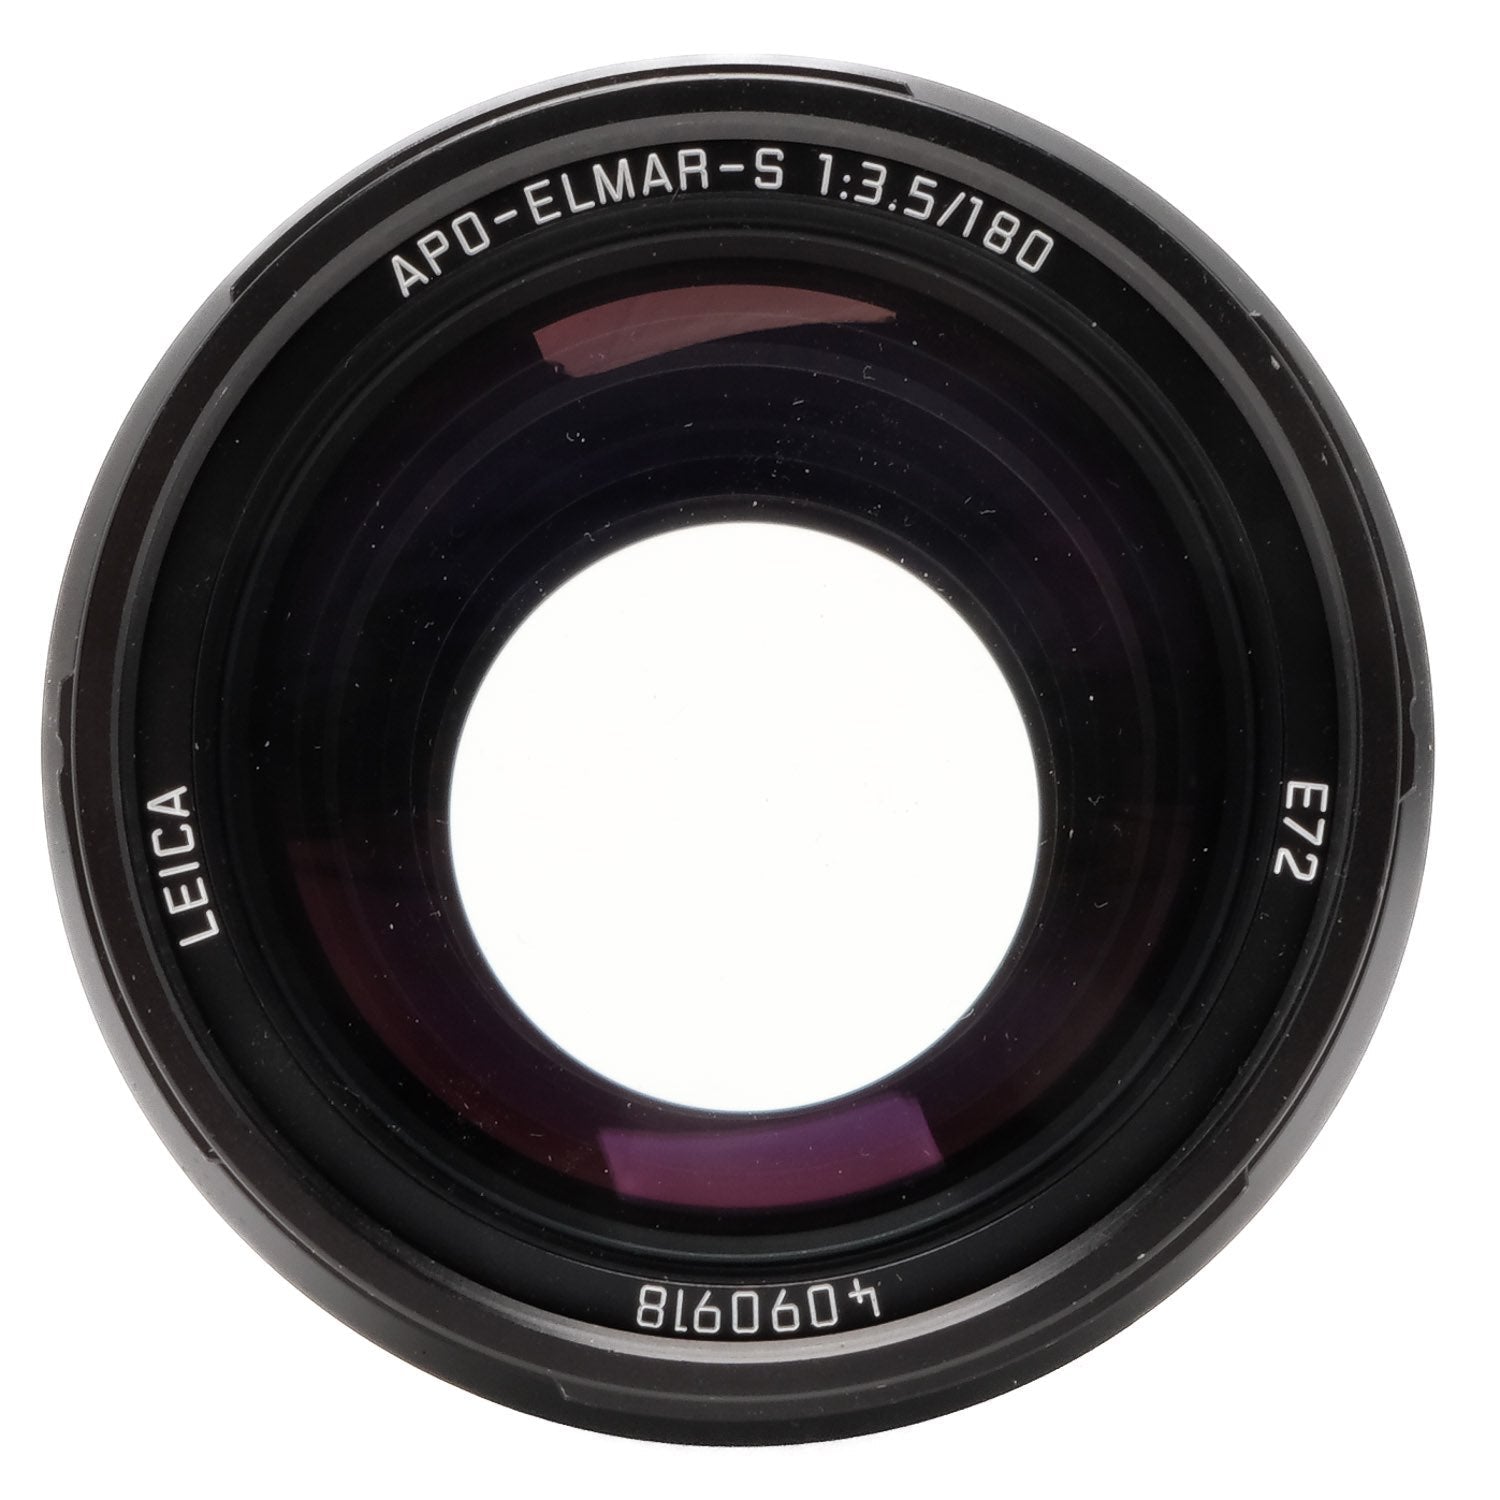 Leica S 180mm f 3.5 APO Elmar 4090918